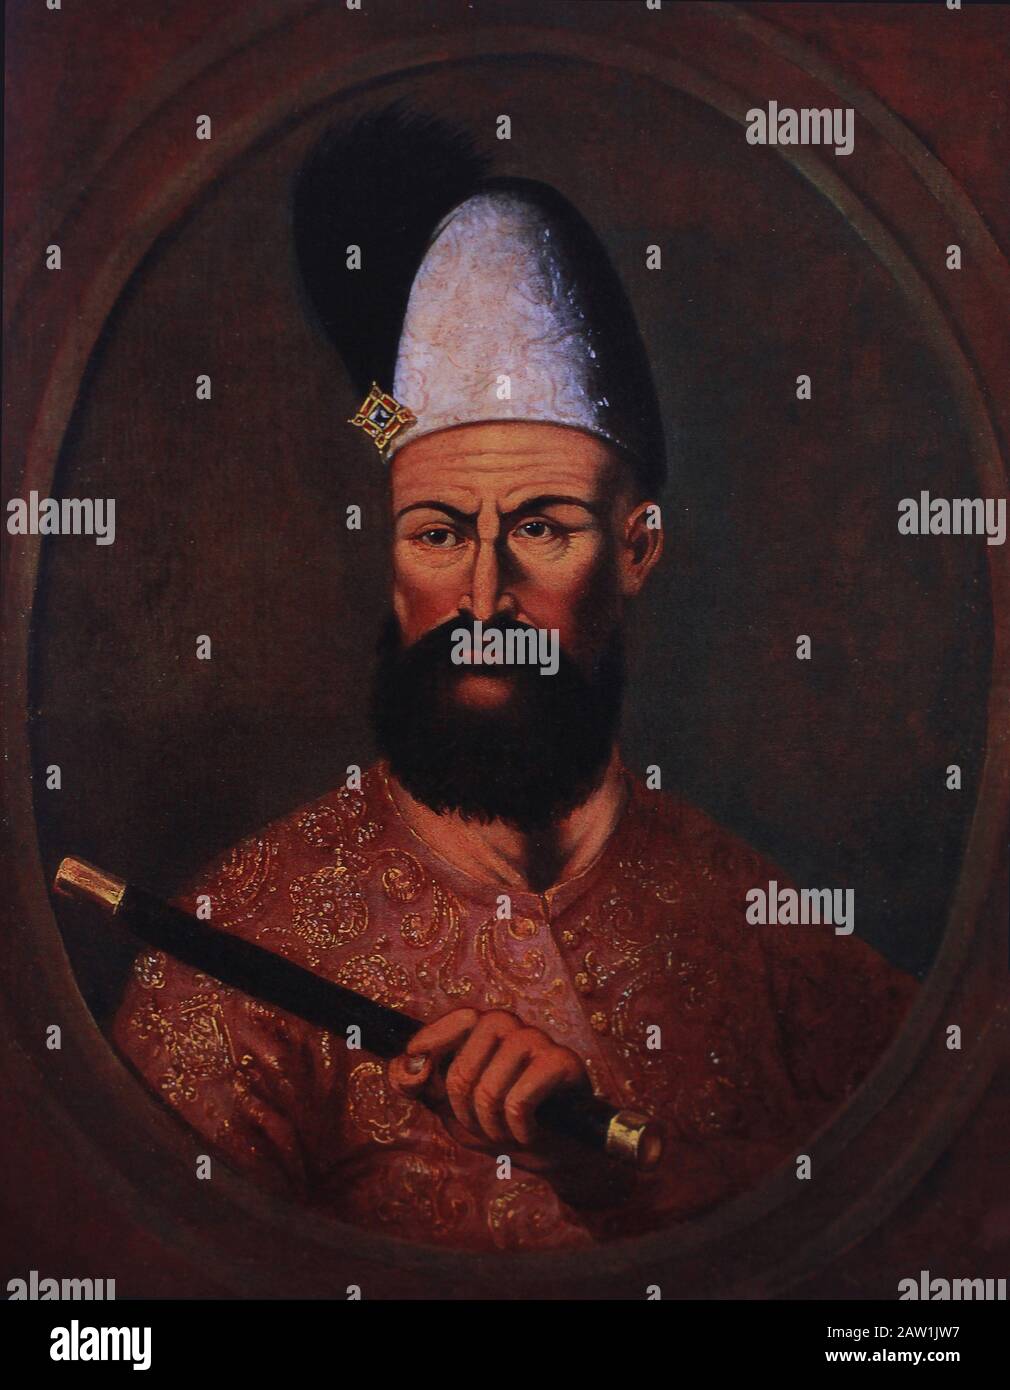 Portrait of Sefer Gazi aga - the vezir of the Crimean Khanate. Painting of the 17th century. Stock Photo